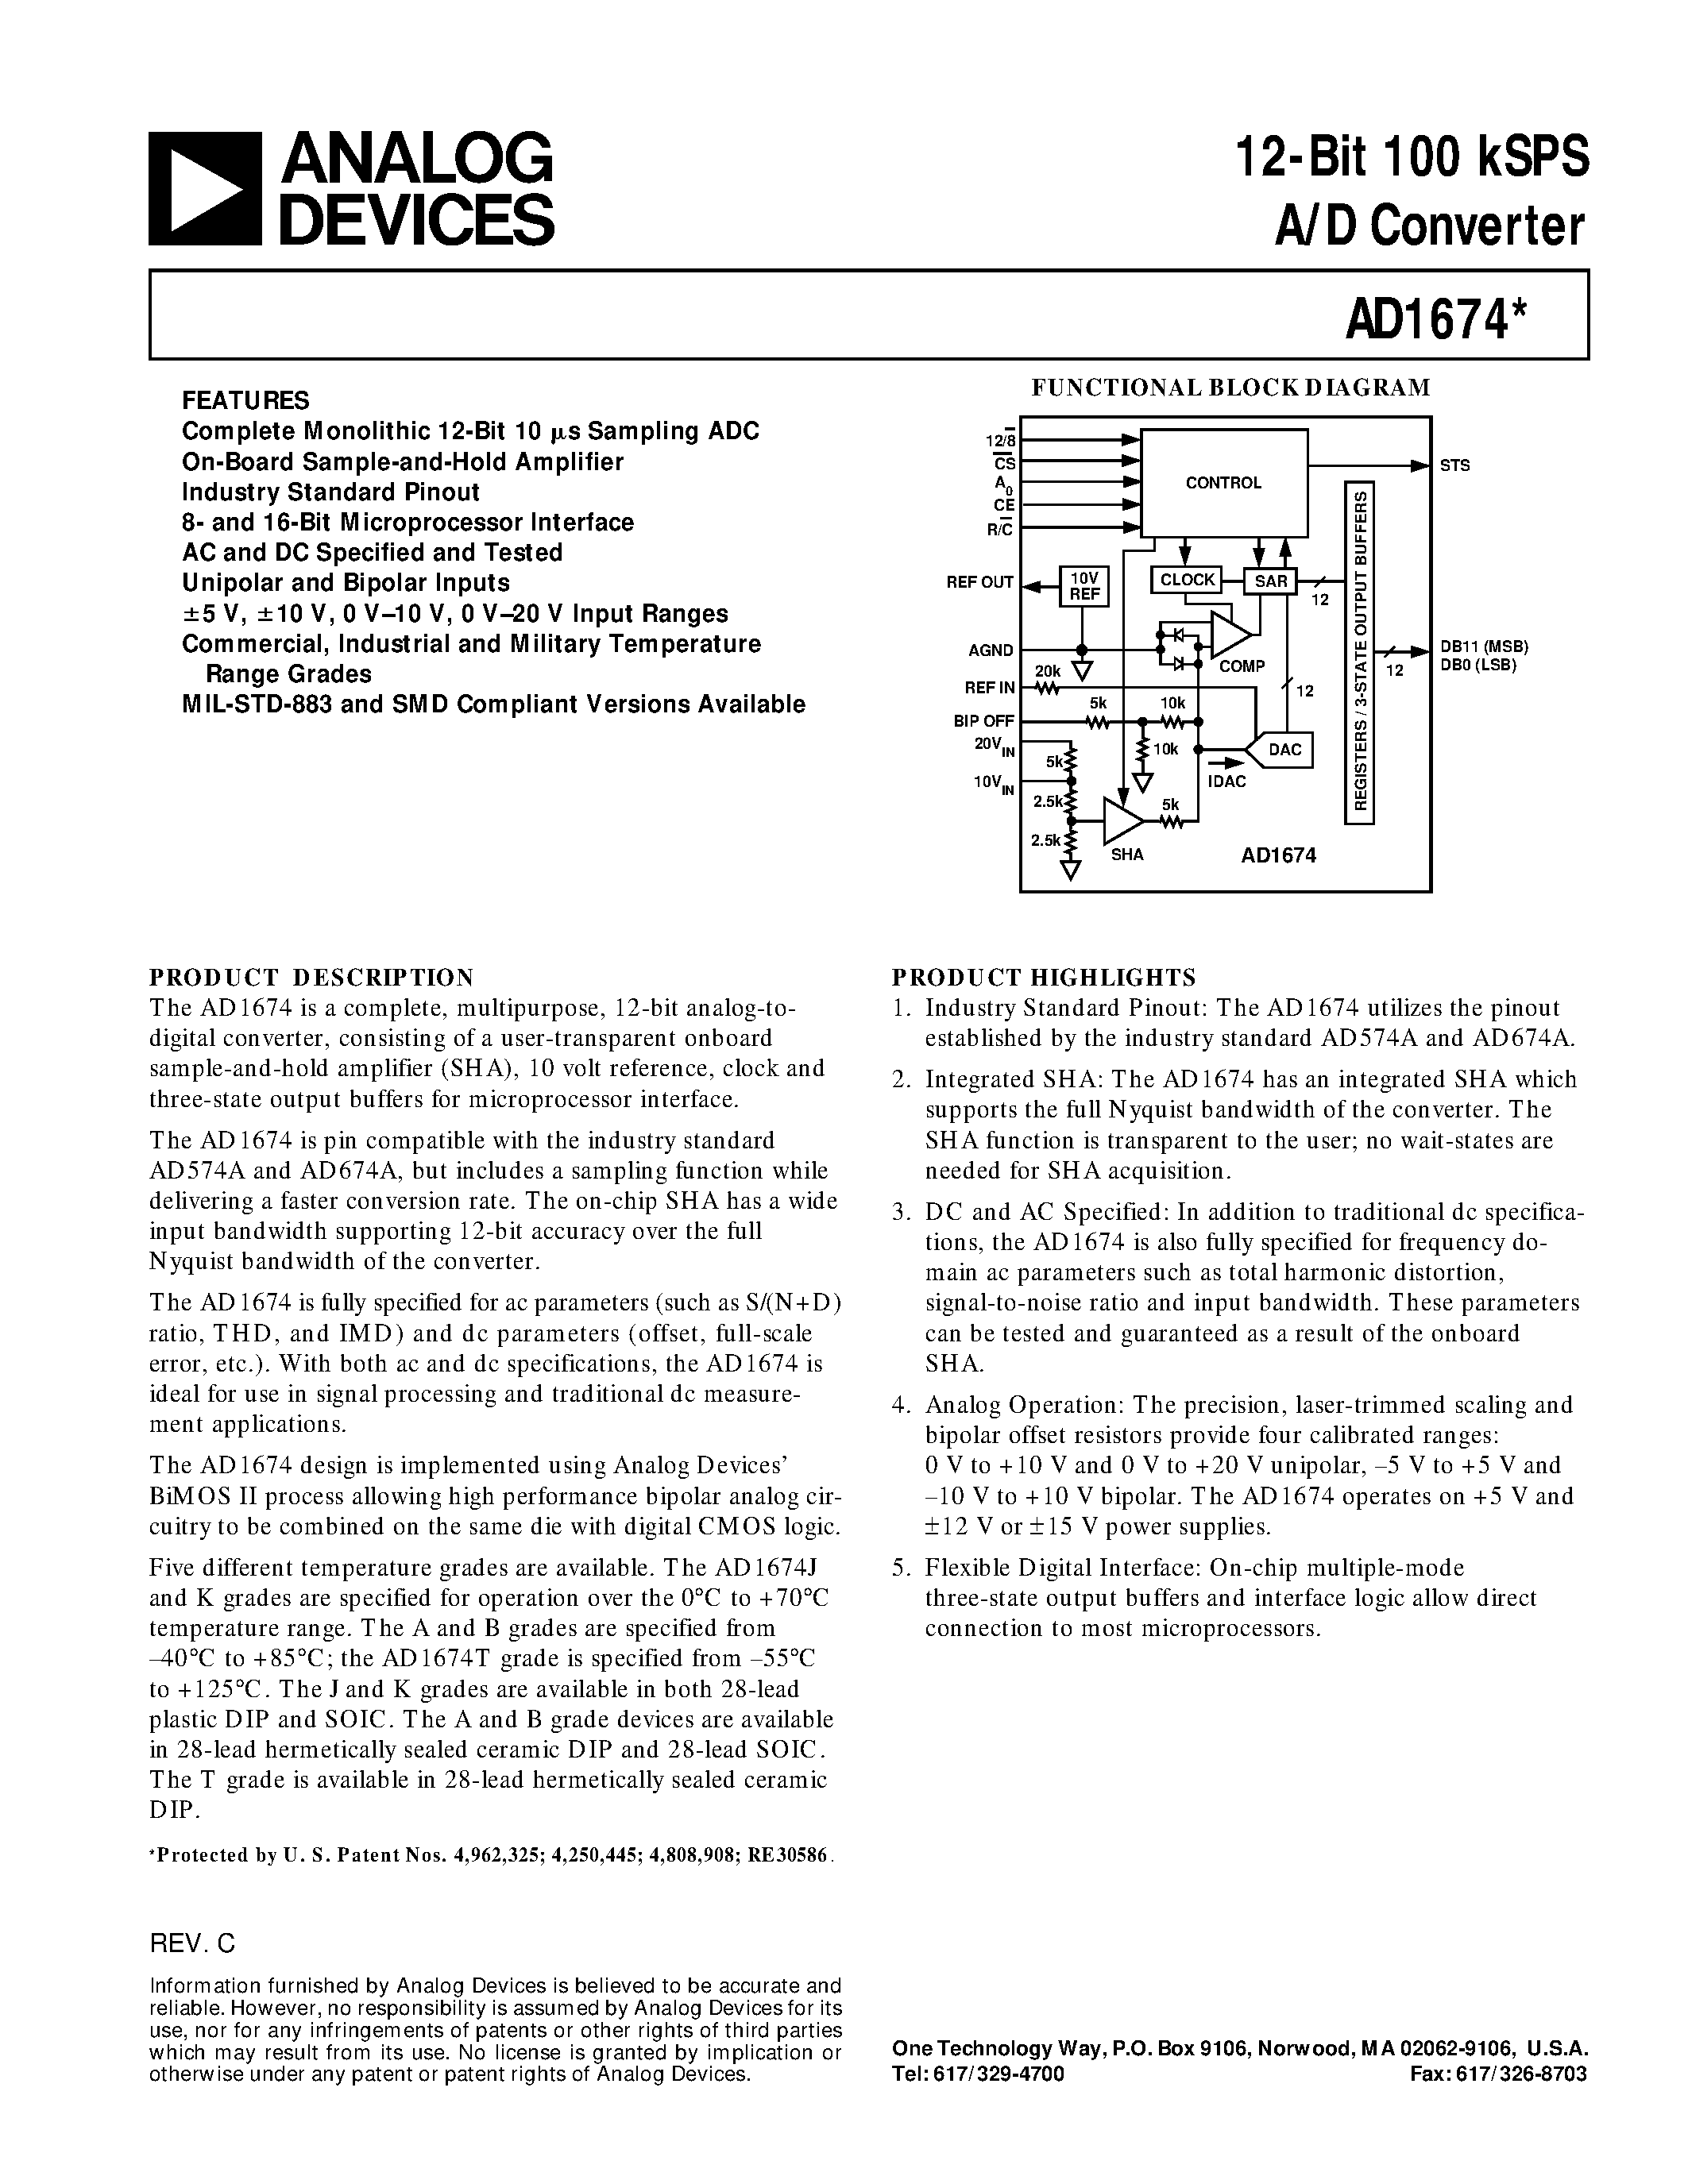 Datasheet AD1674J - 12-Bit 100 kSPS A/D Converter page 1